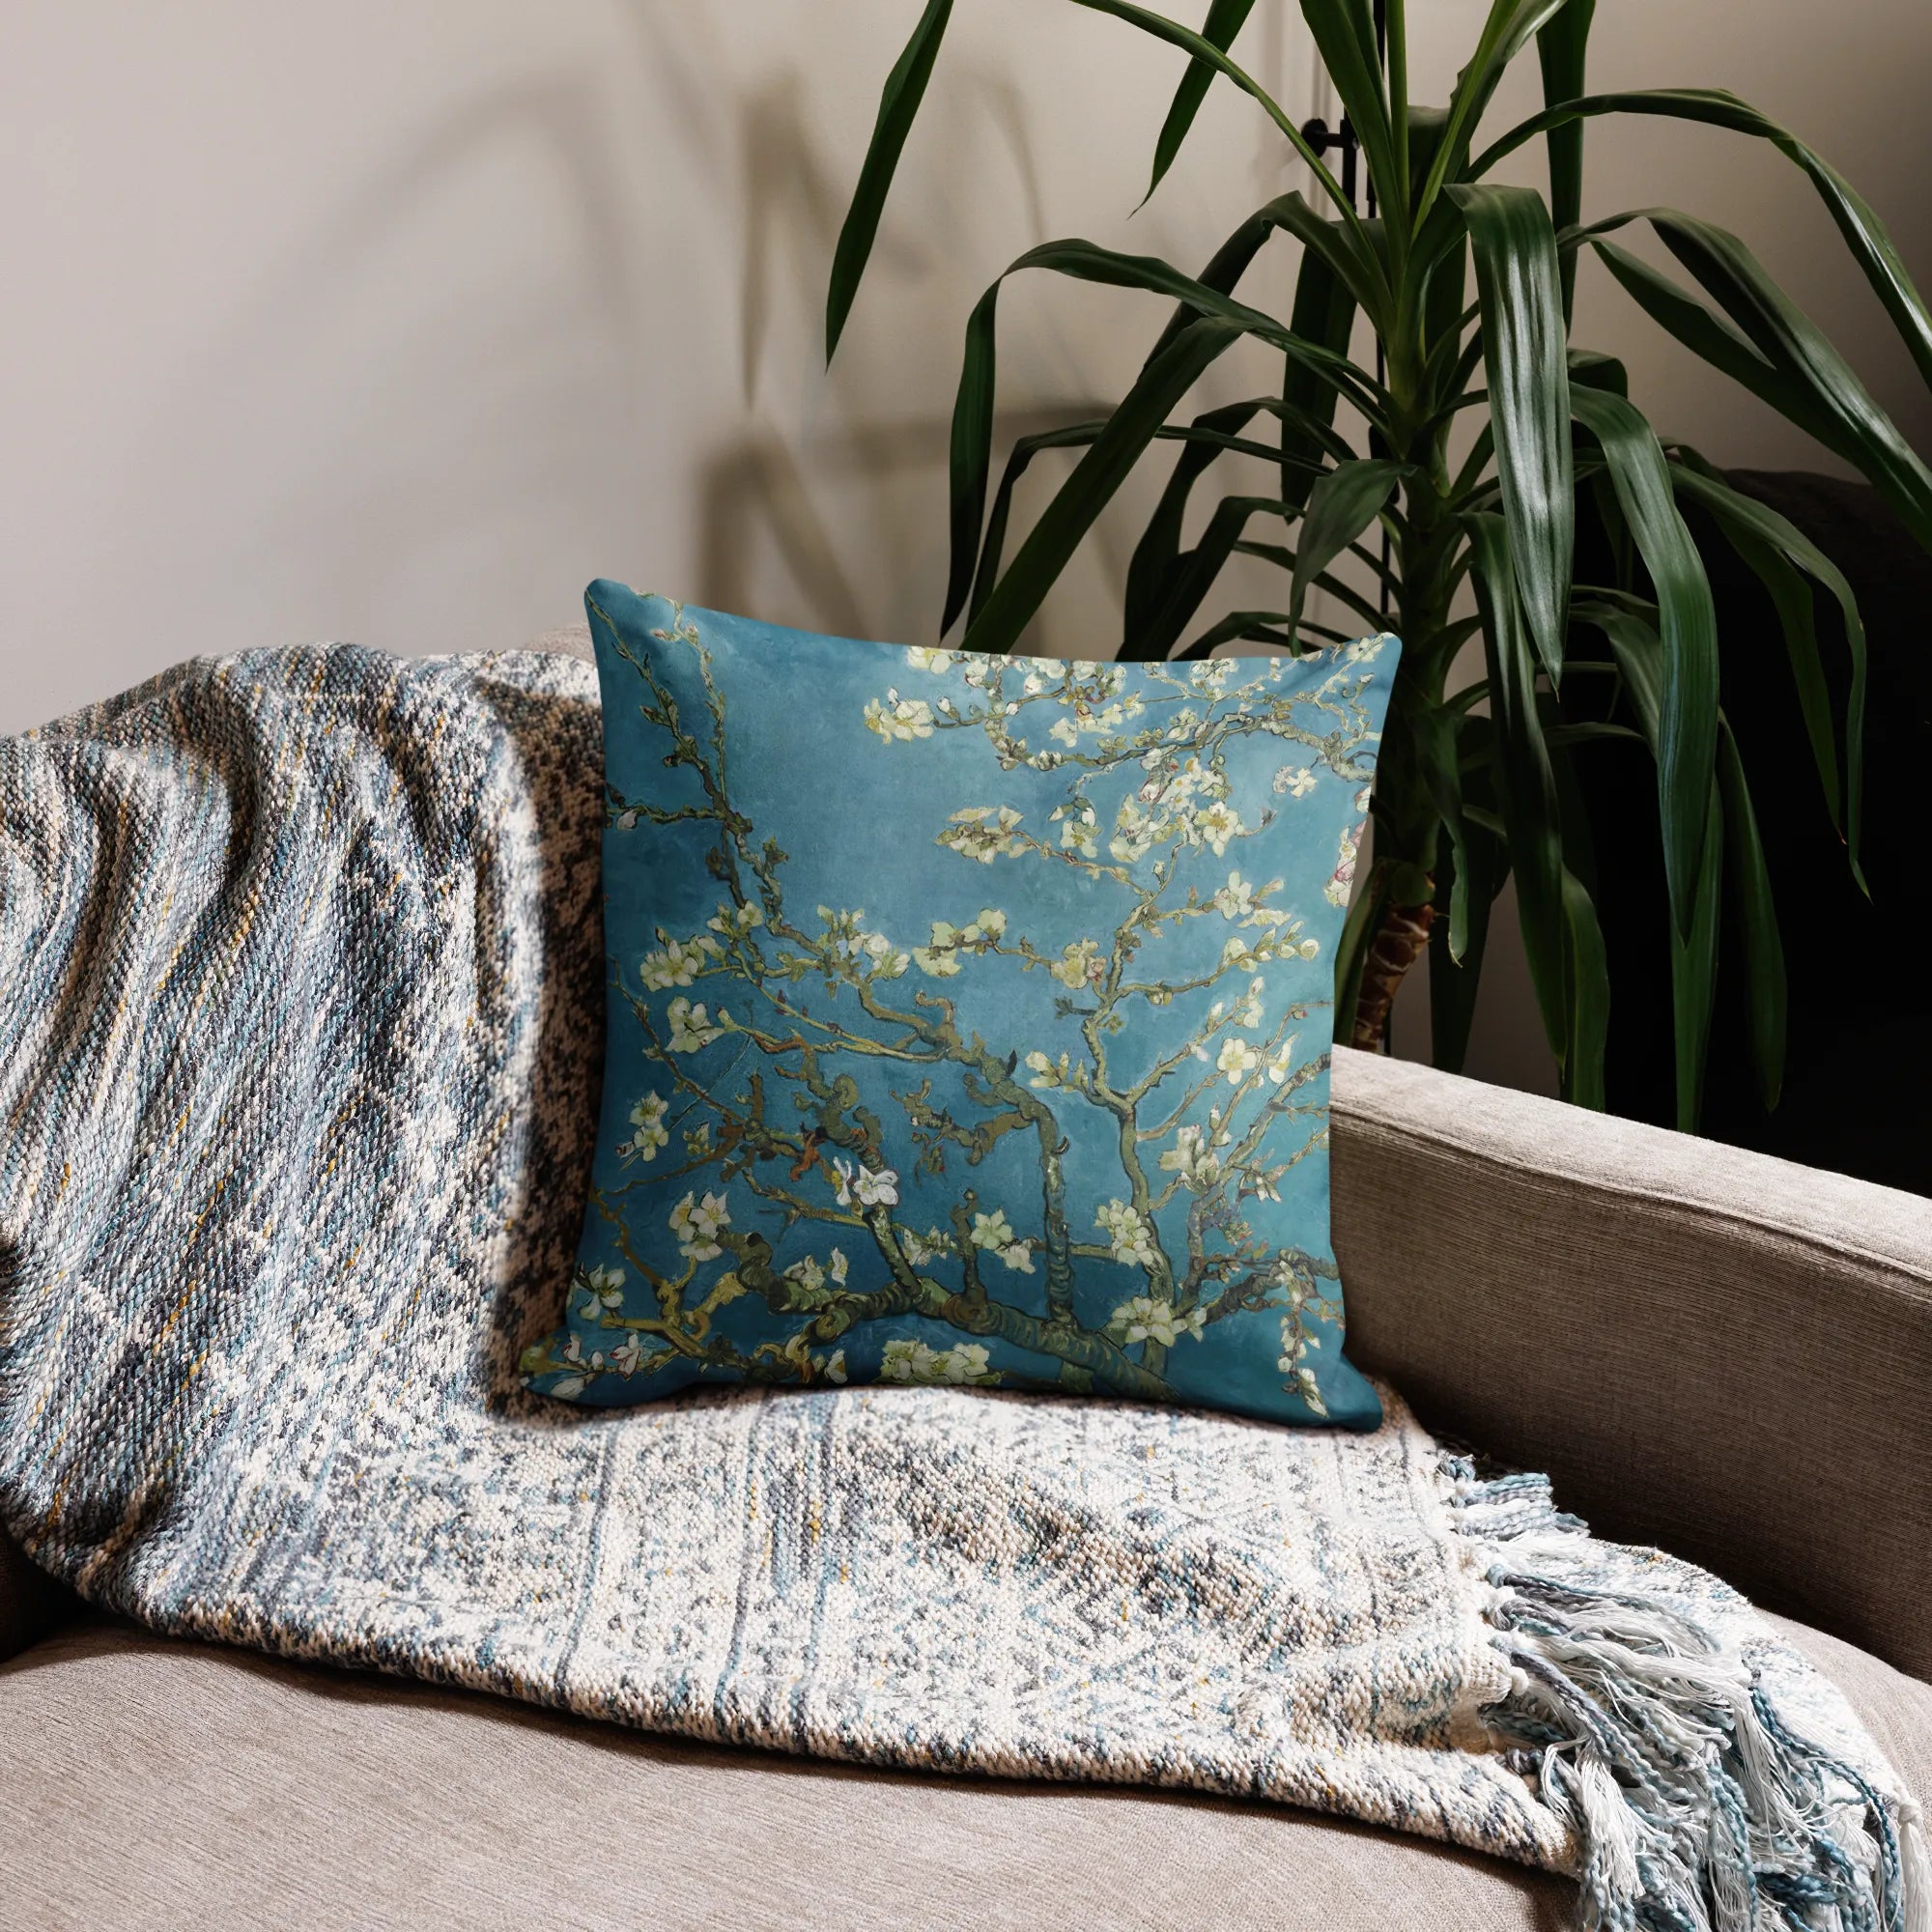 Almond Blossom By Vincent Van Gogh Cushion - Throw Pillows - Aesthetic Art